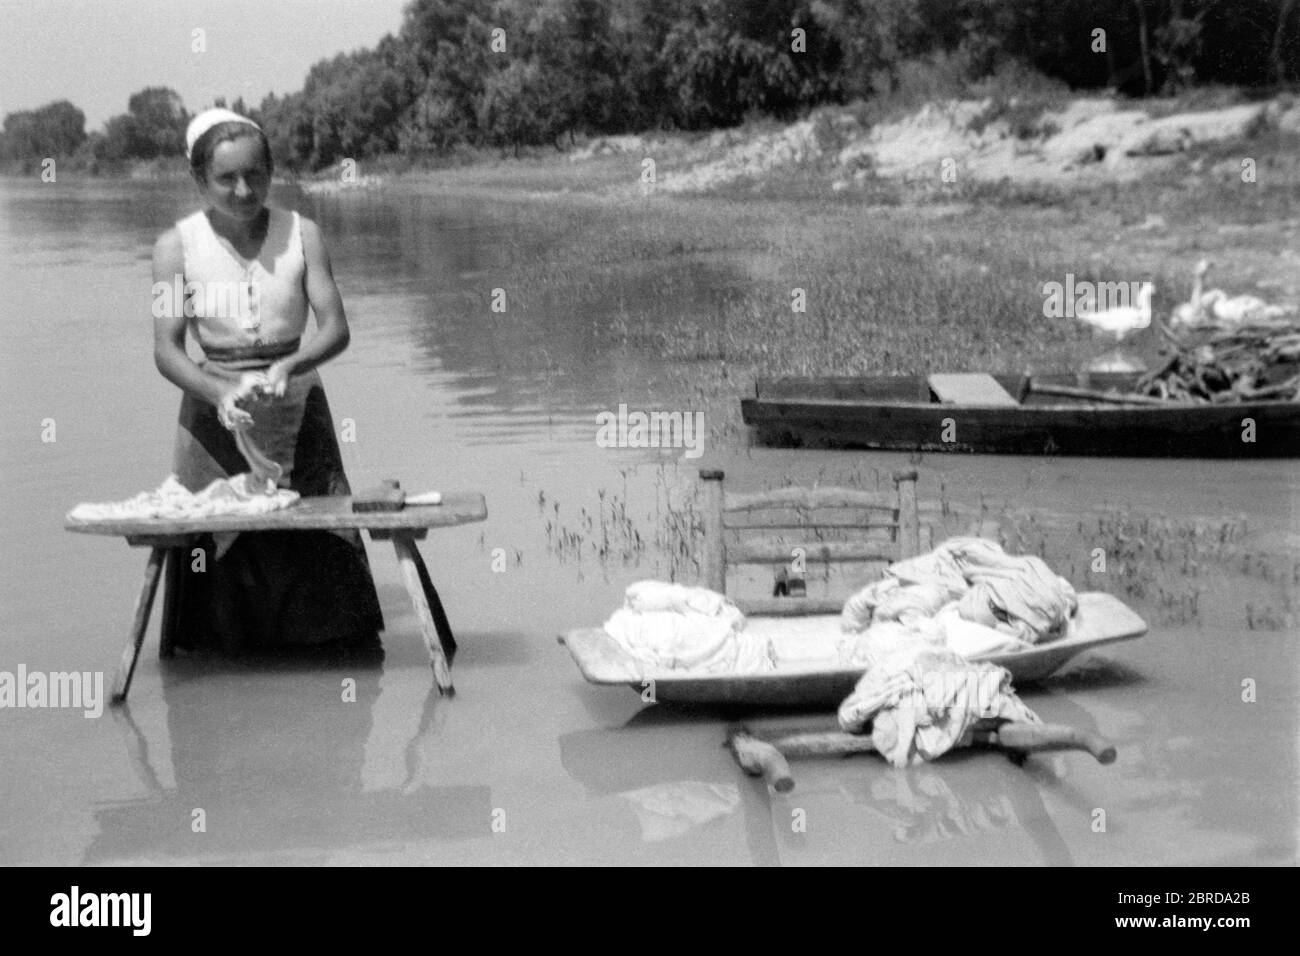 https://c8.alamy.com/comp/2BRDA2B/woman-doing-laundry-by-hand-washing-clothes-in-river-1940s-hungary-2BRDA2B.jpg